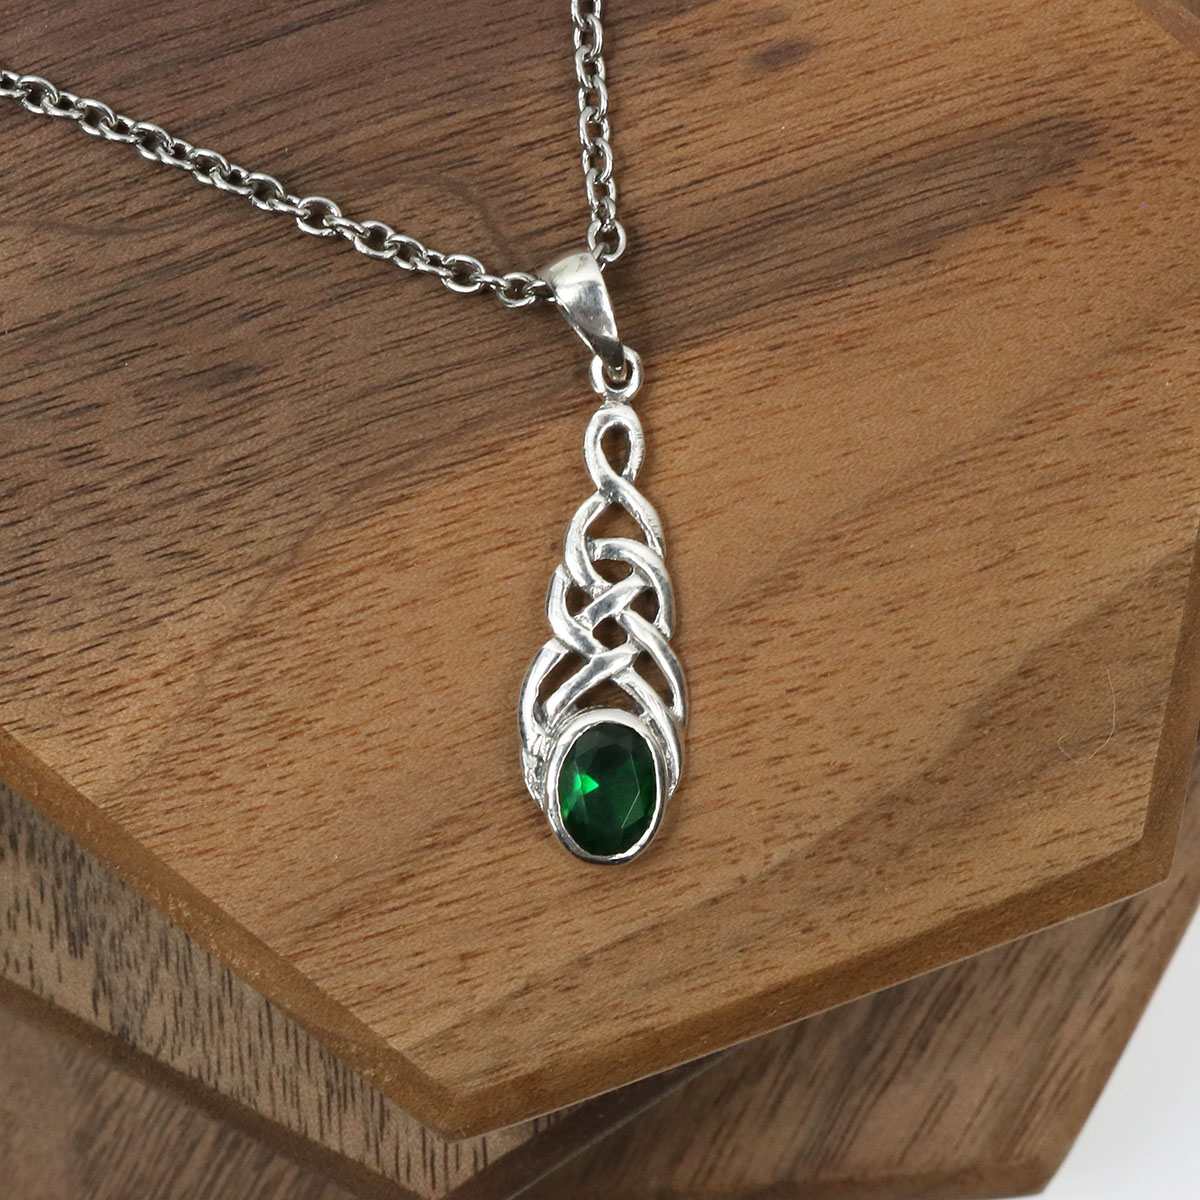 Diamond Emerald White Gold Celtic Knot Heart Necklace